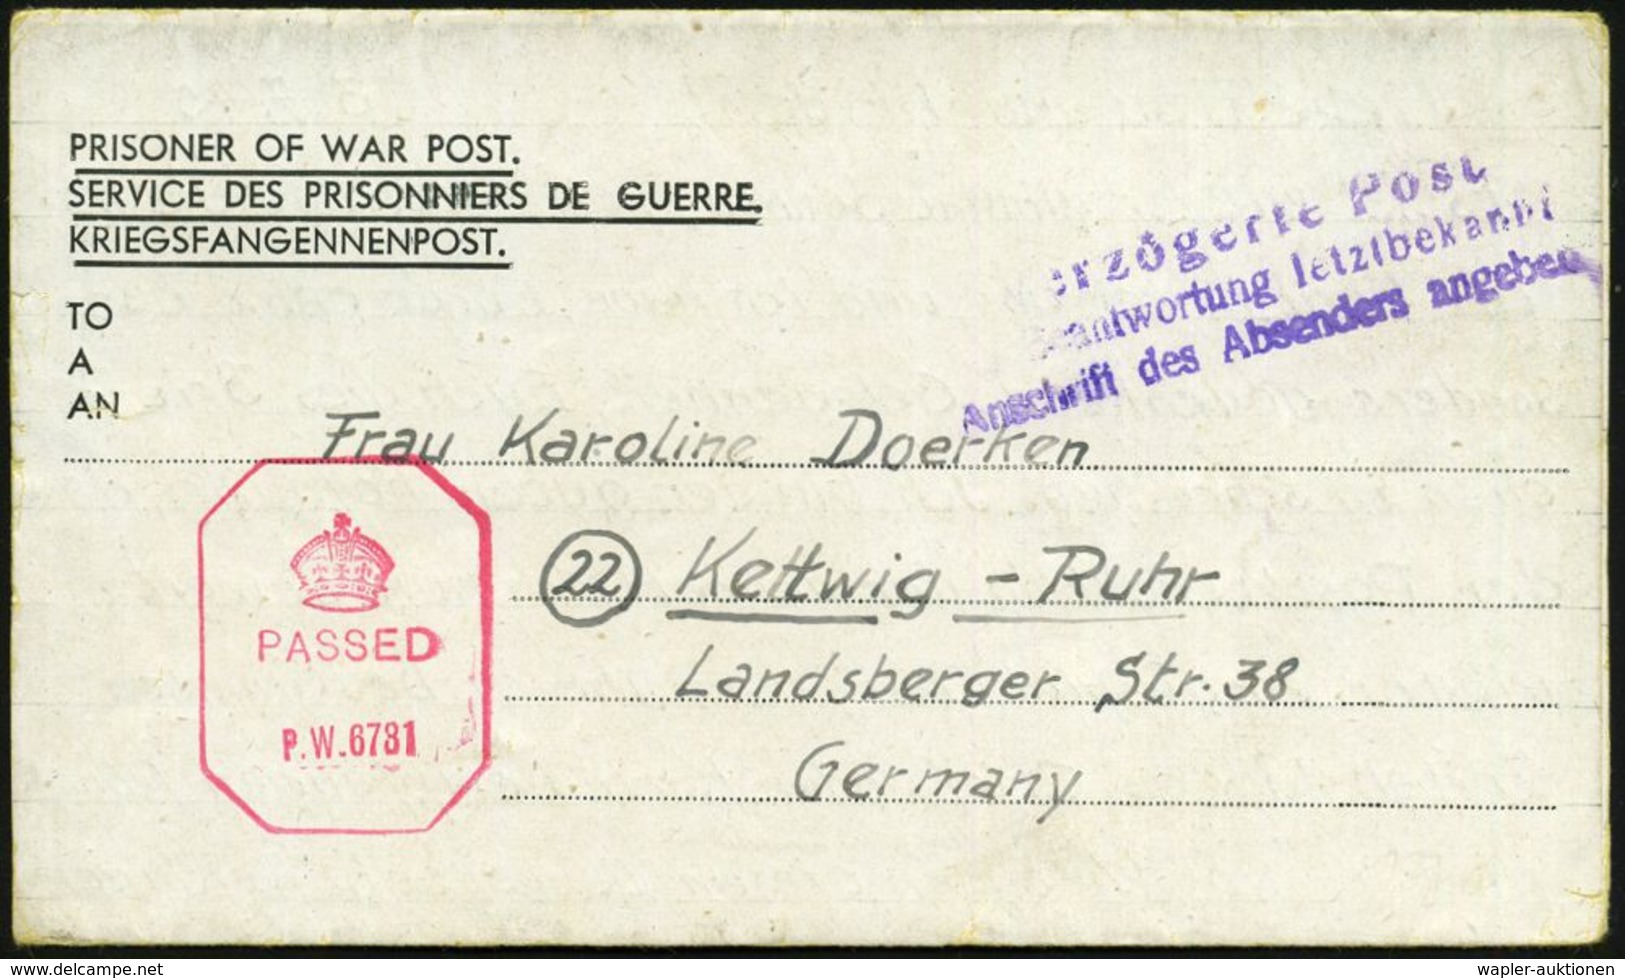 KGF-POST NACH DEM II. WELTKRIEG : GROSSBRITANNIEN 1945 (3.7.) Kgf.-Faltbf. (dreisprachig) ,viol. 3L: Verzögerte Post/Bea - Red Cross